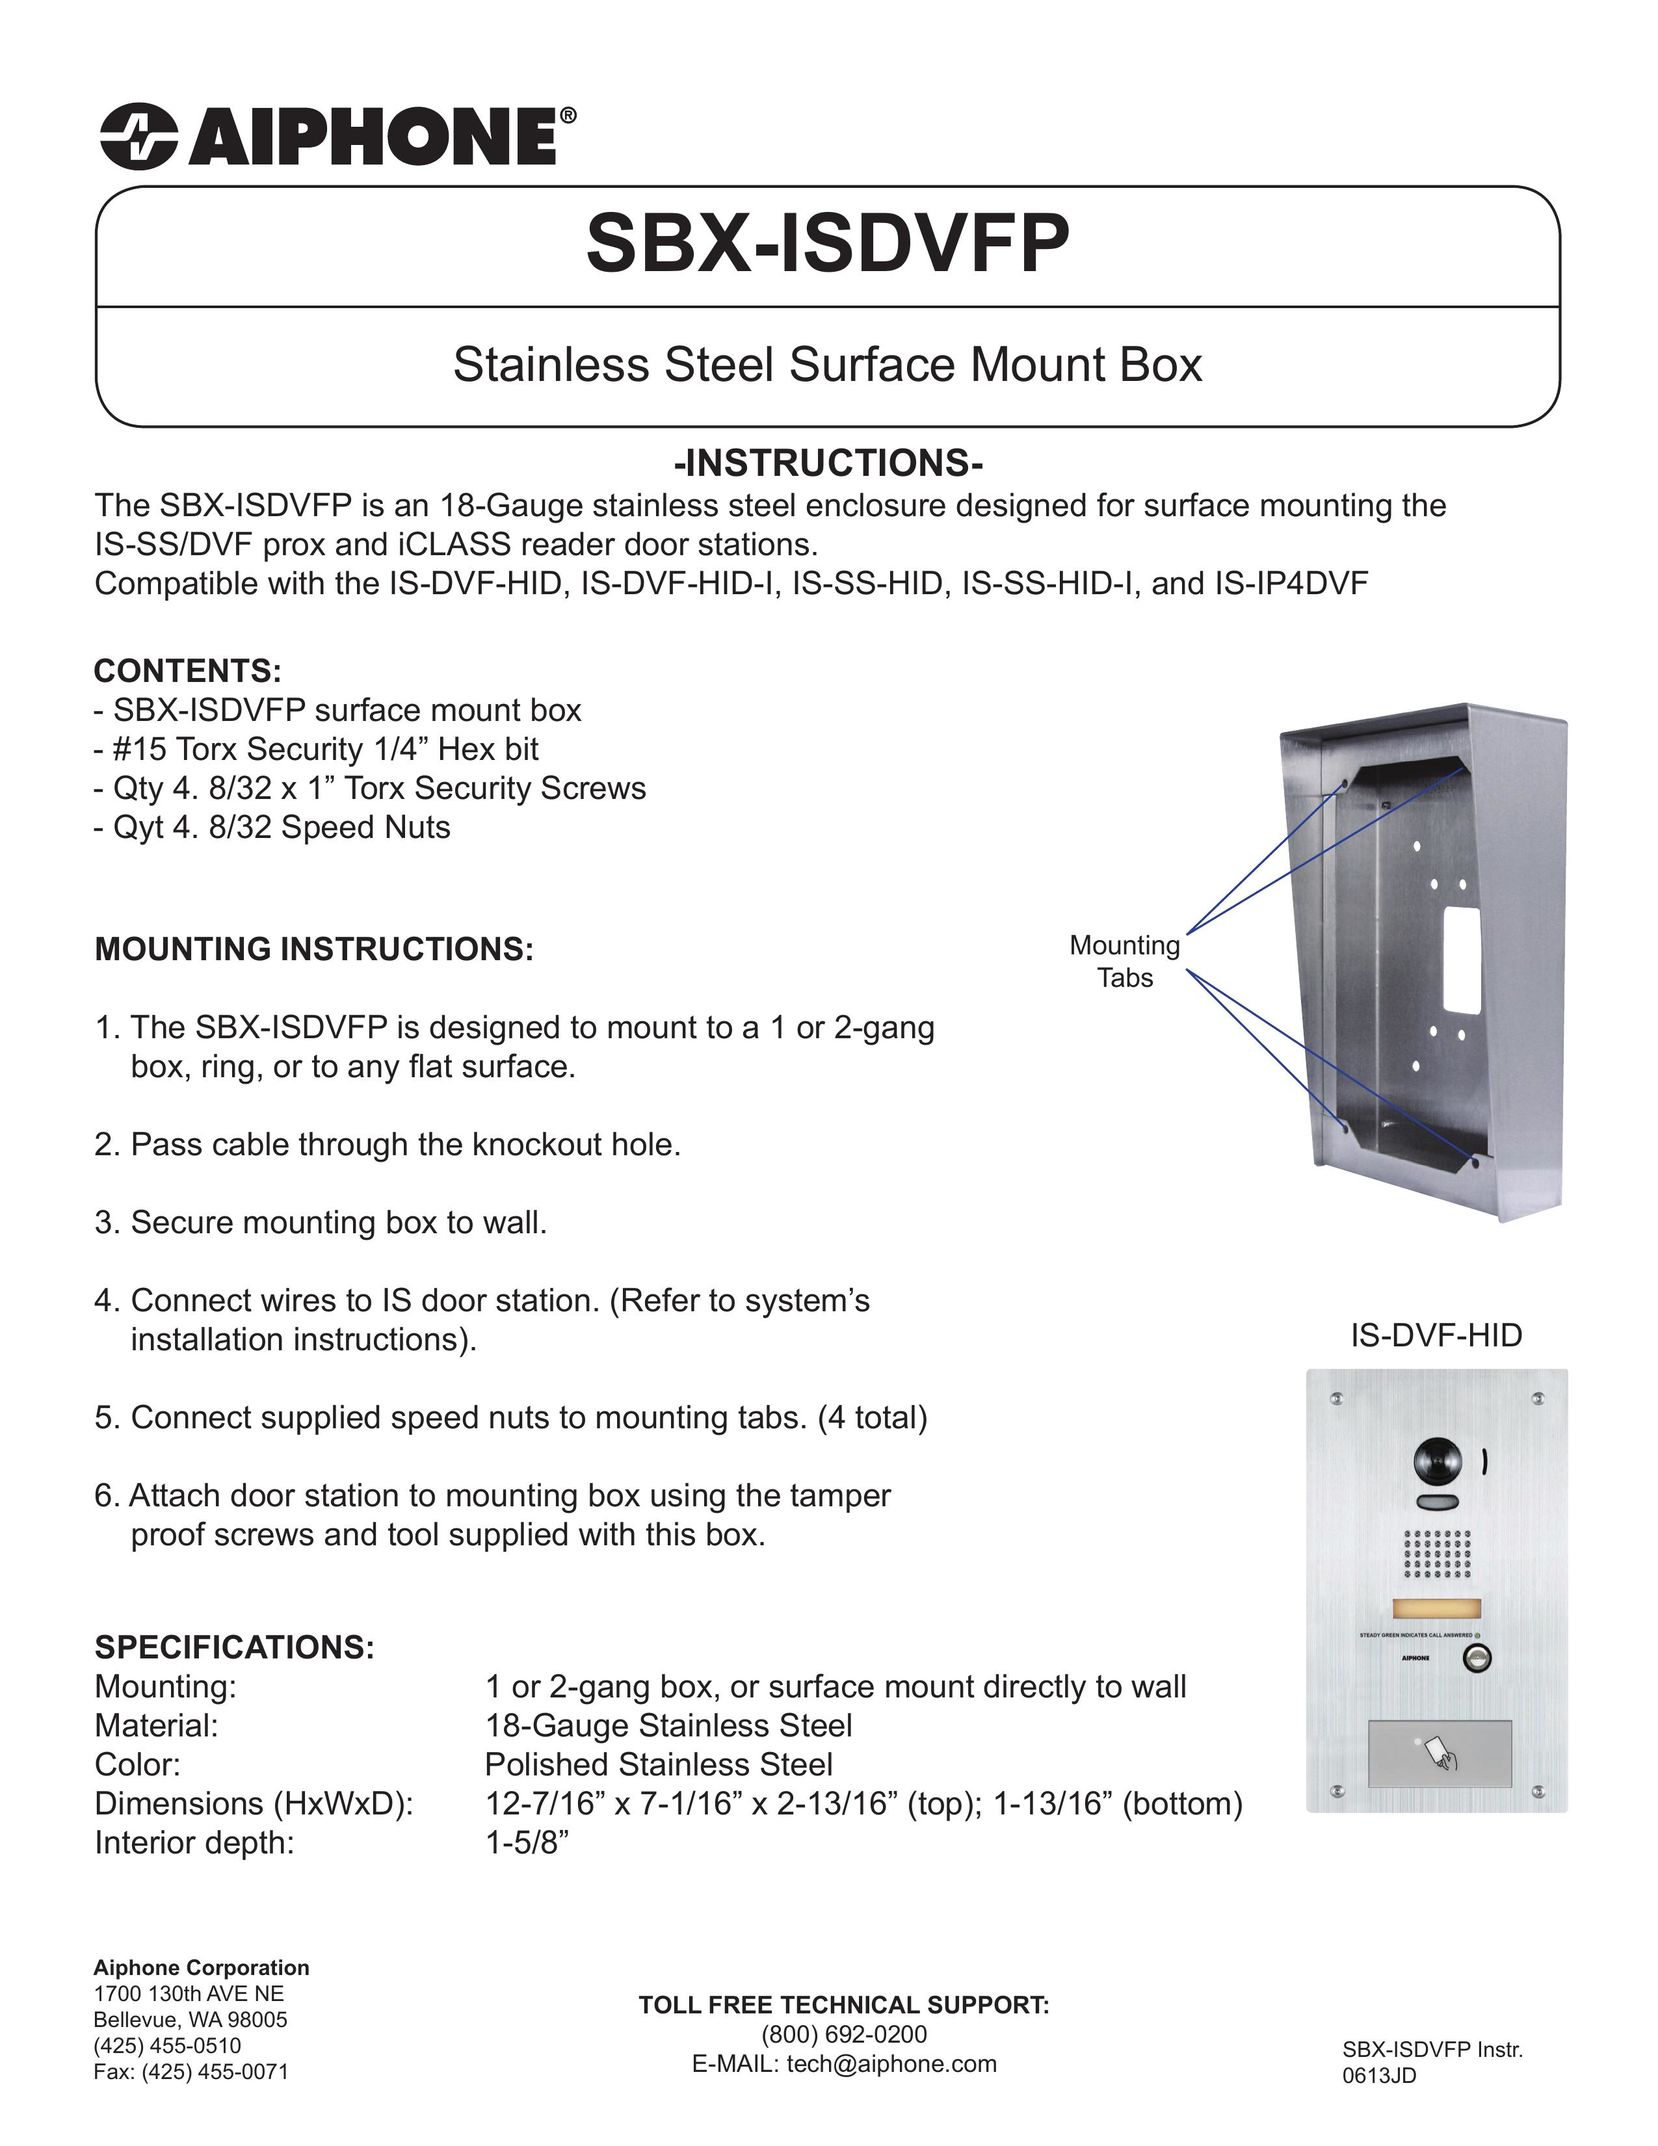 Aiphone SBX-ISDVFD TV Mount User Manual